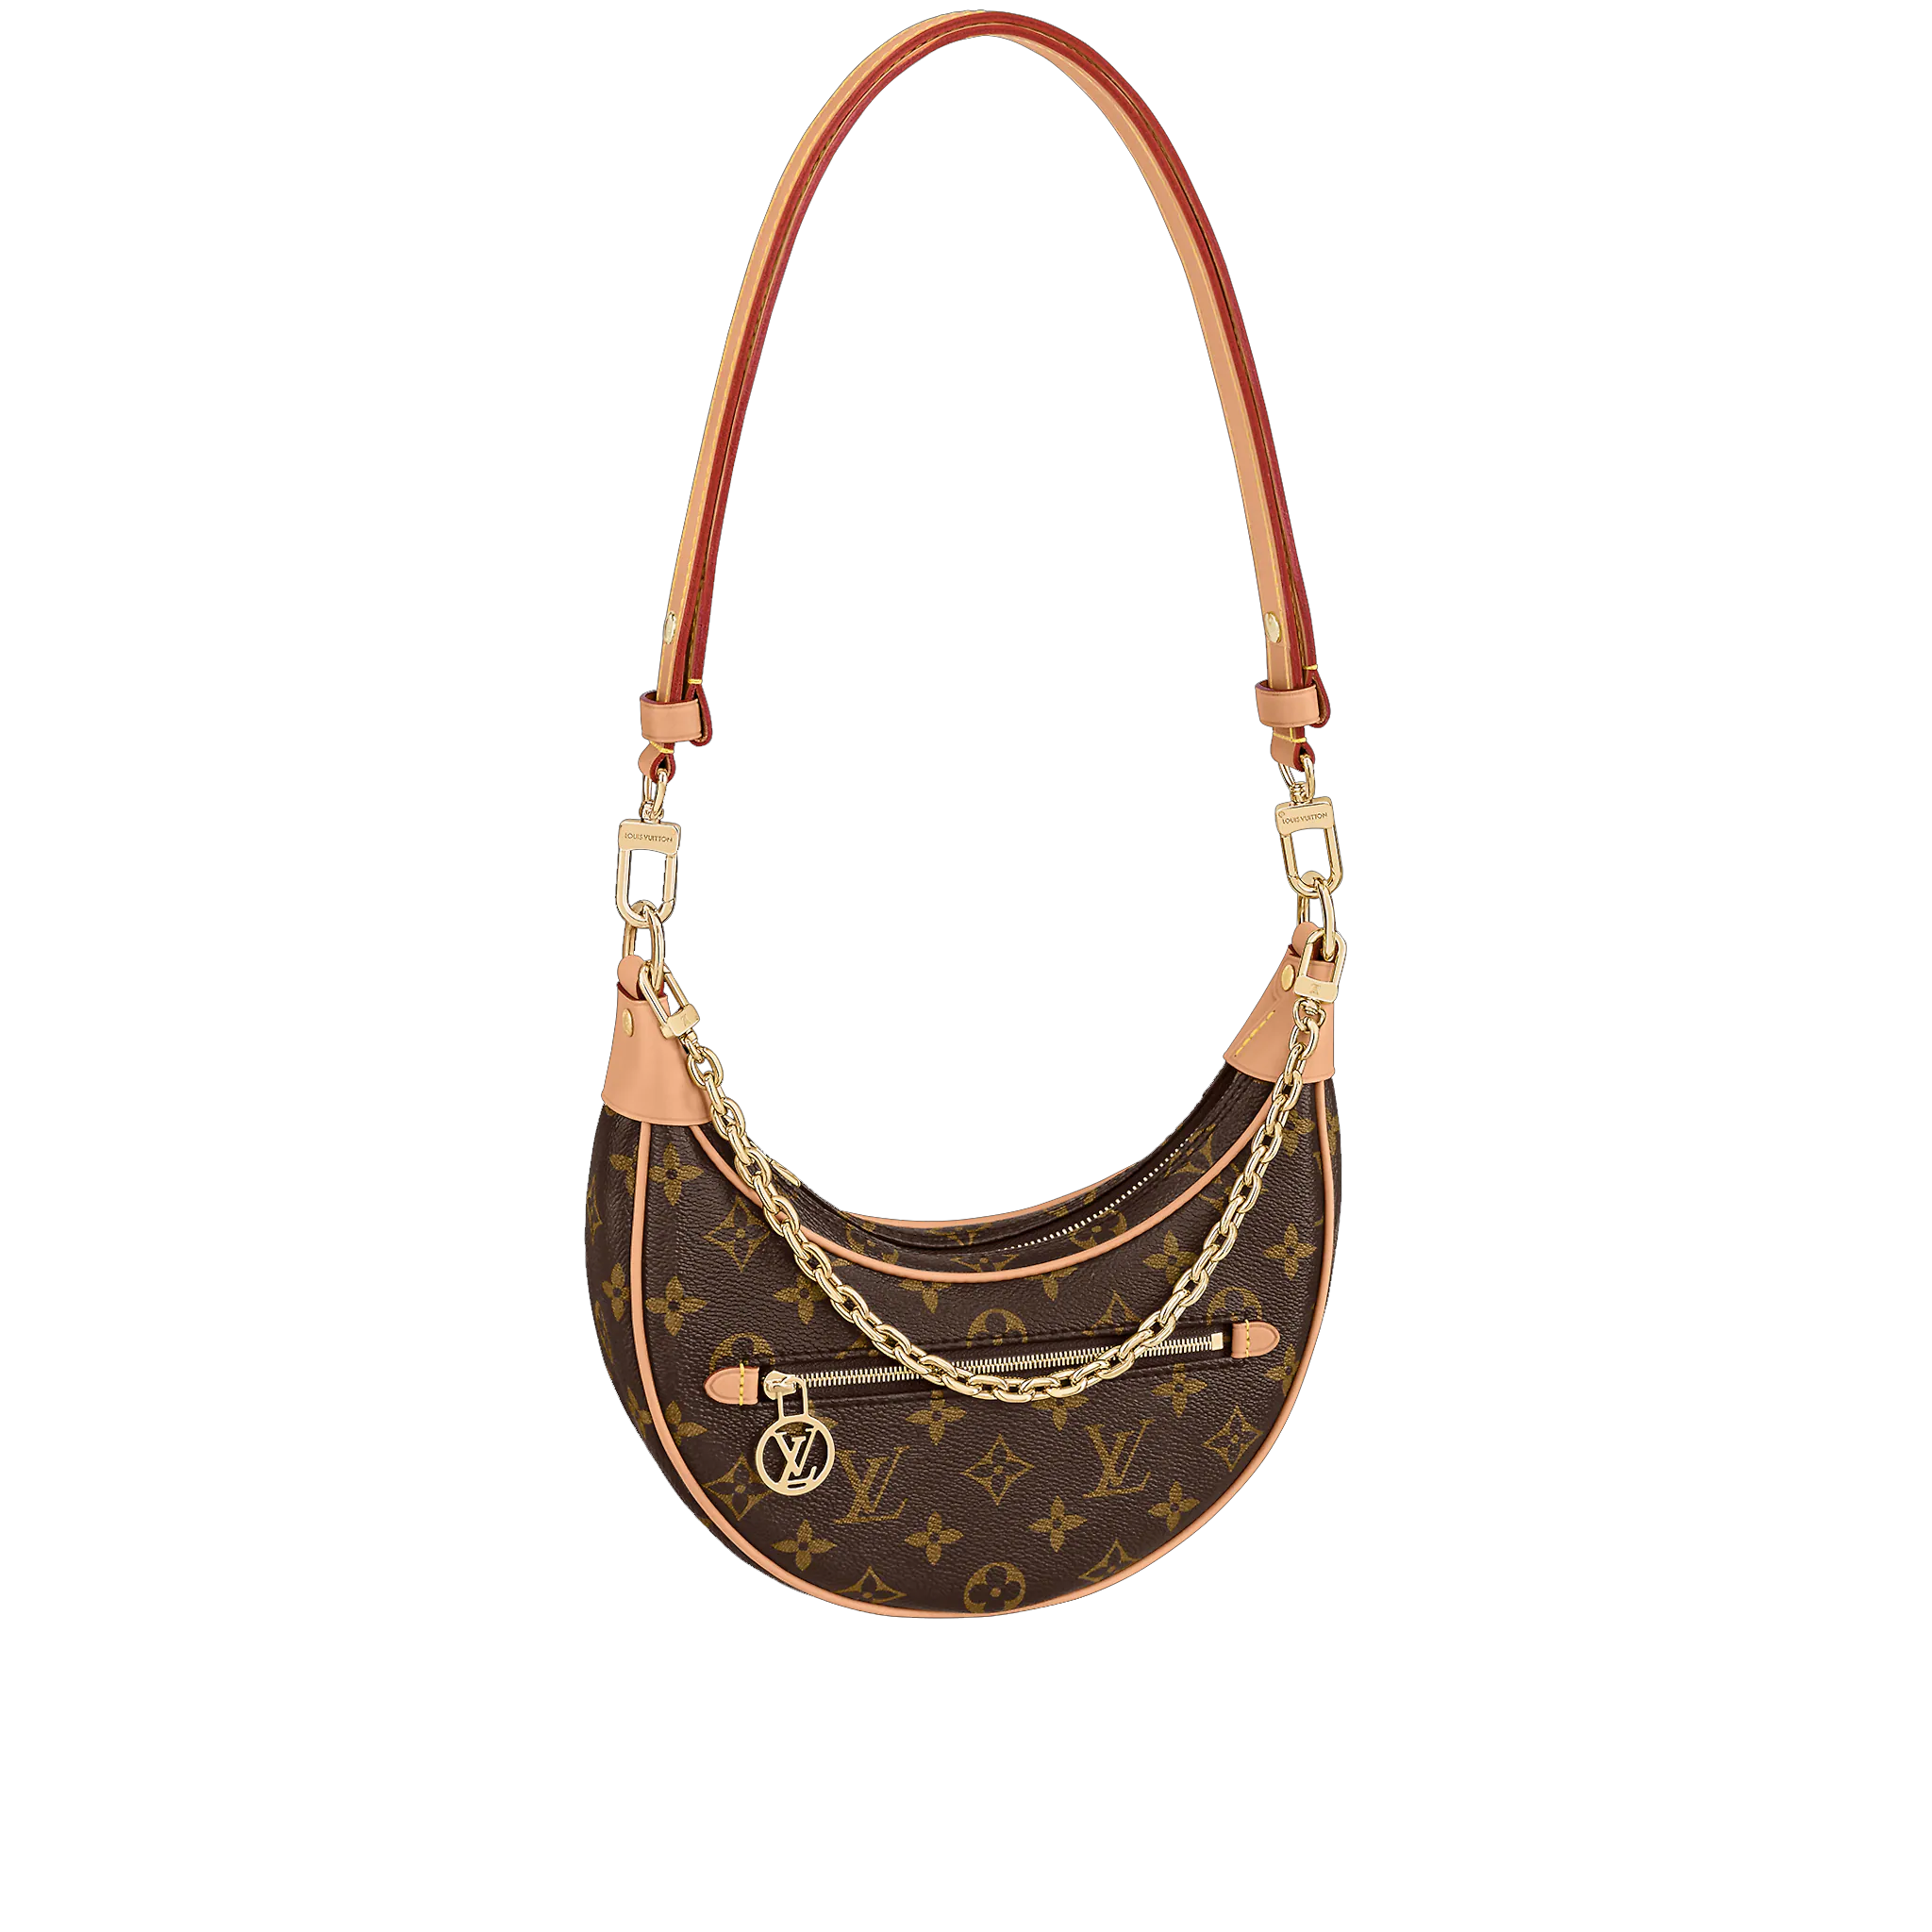 Matilda djerf wearing vintage louis vuitton handbag